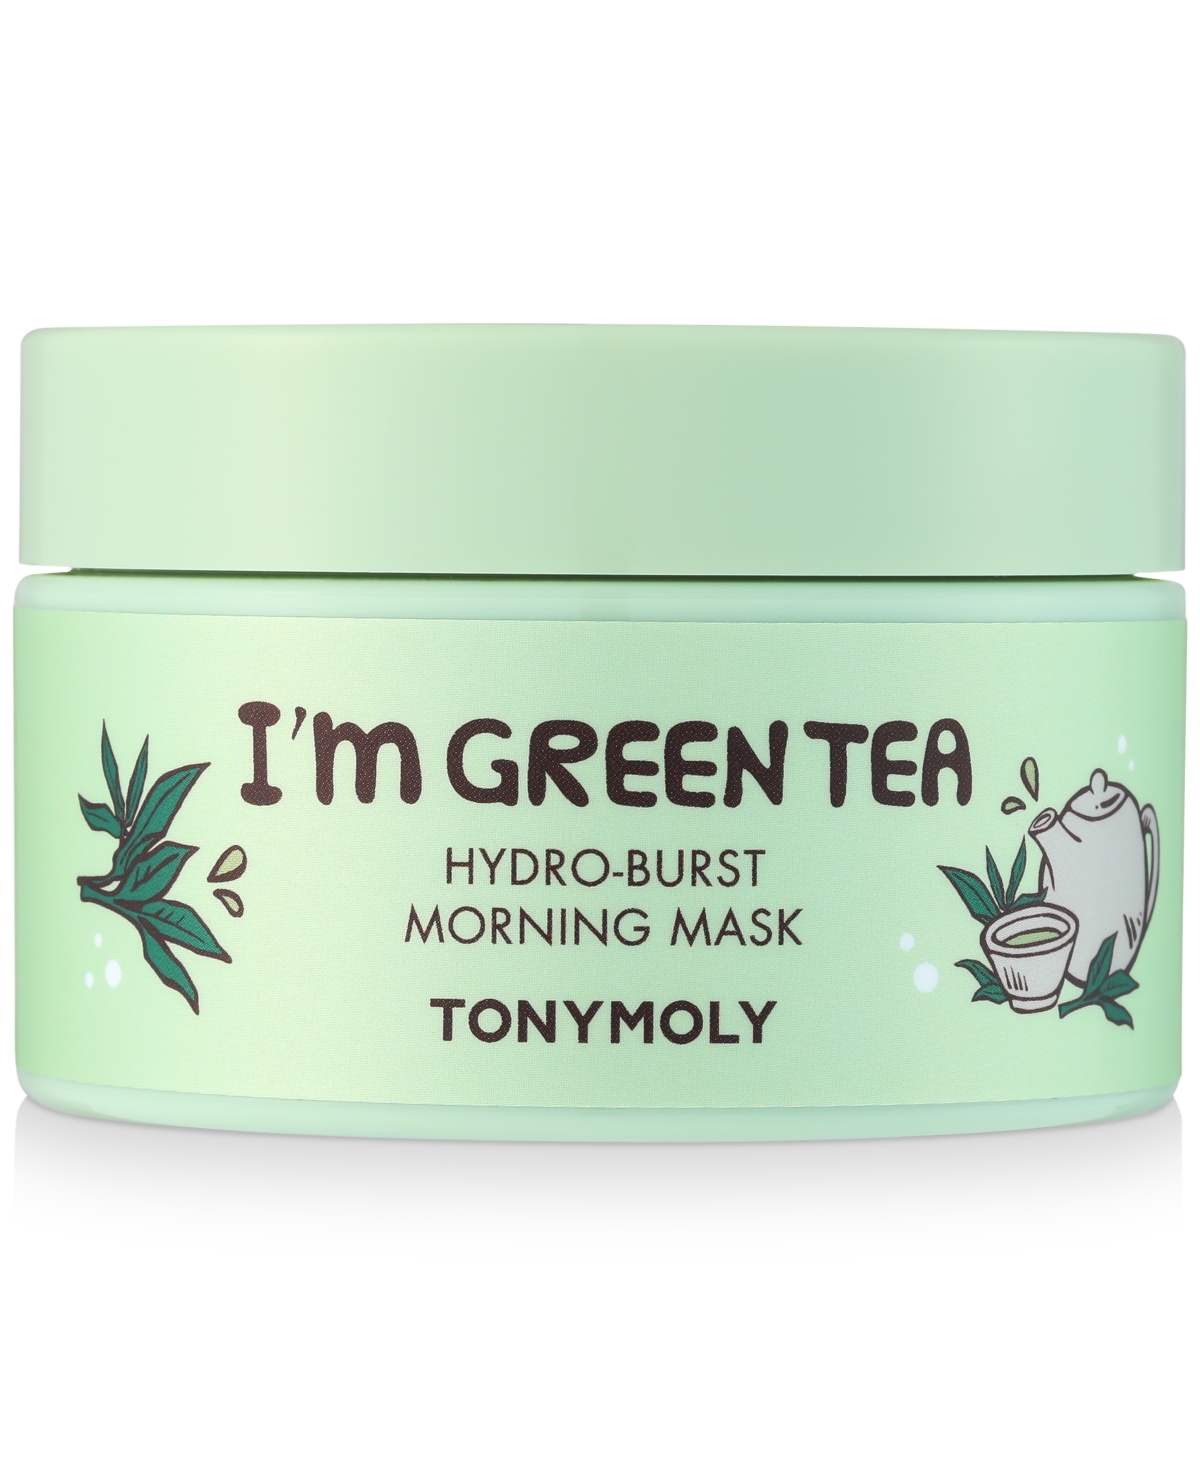 I'm Green Tea Hydro-Burst Morning Mask